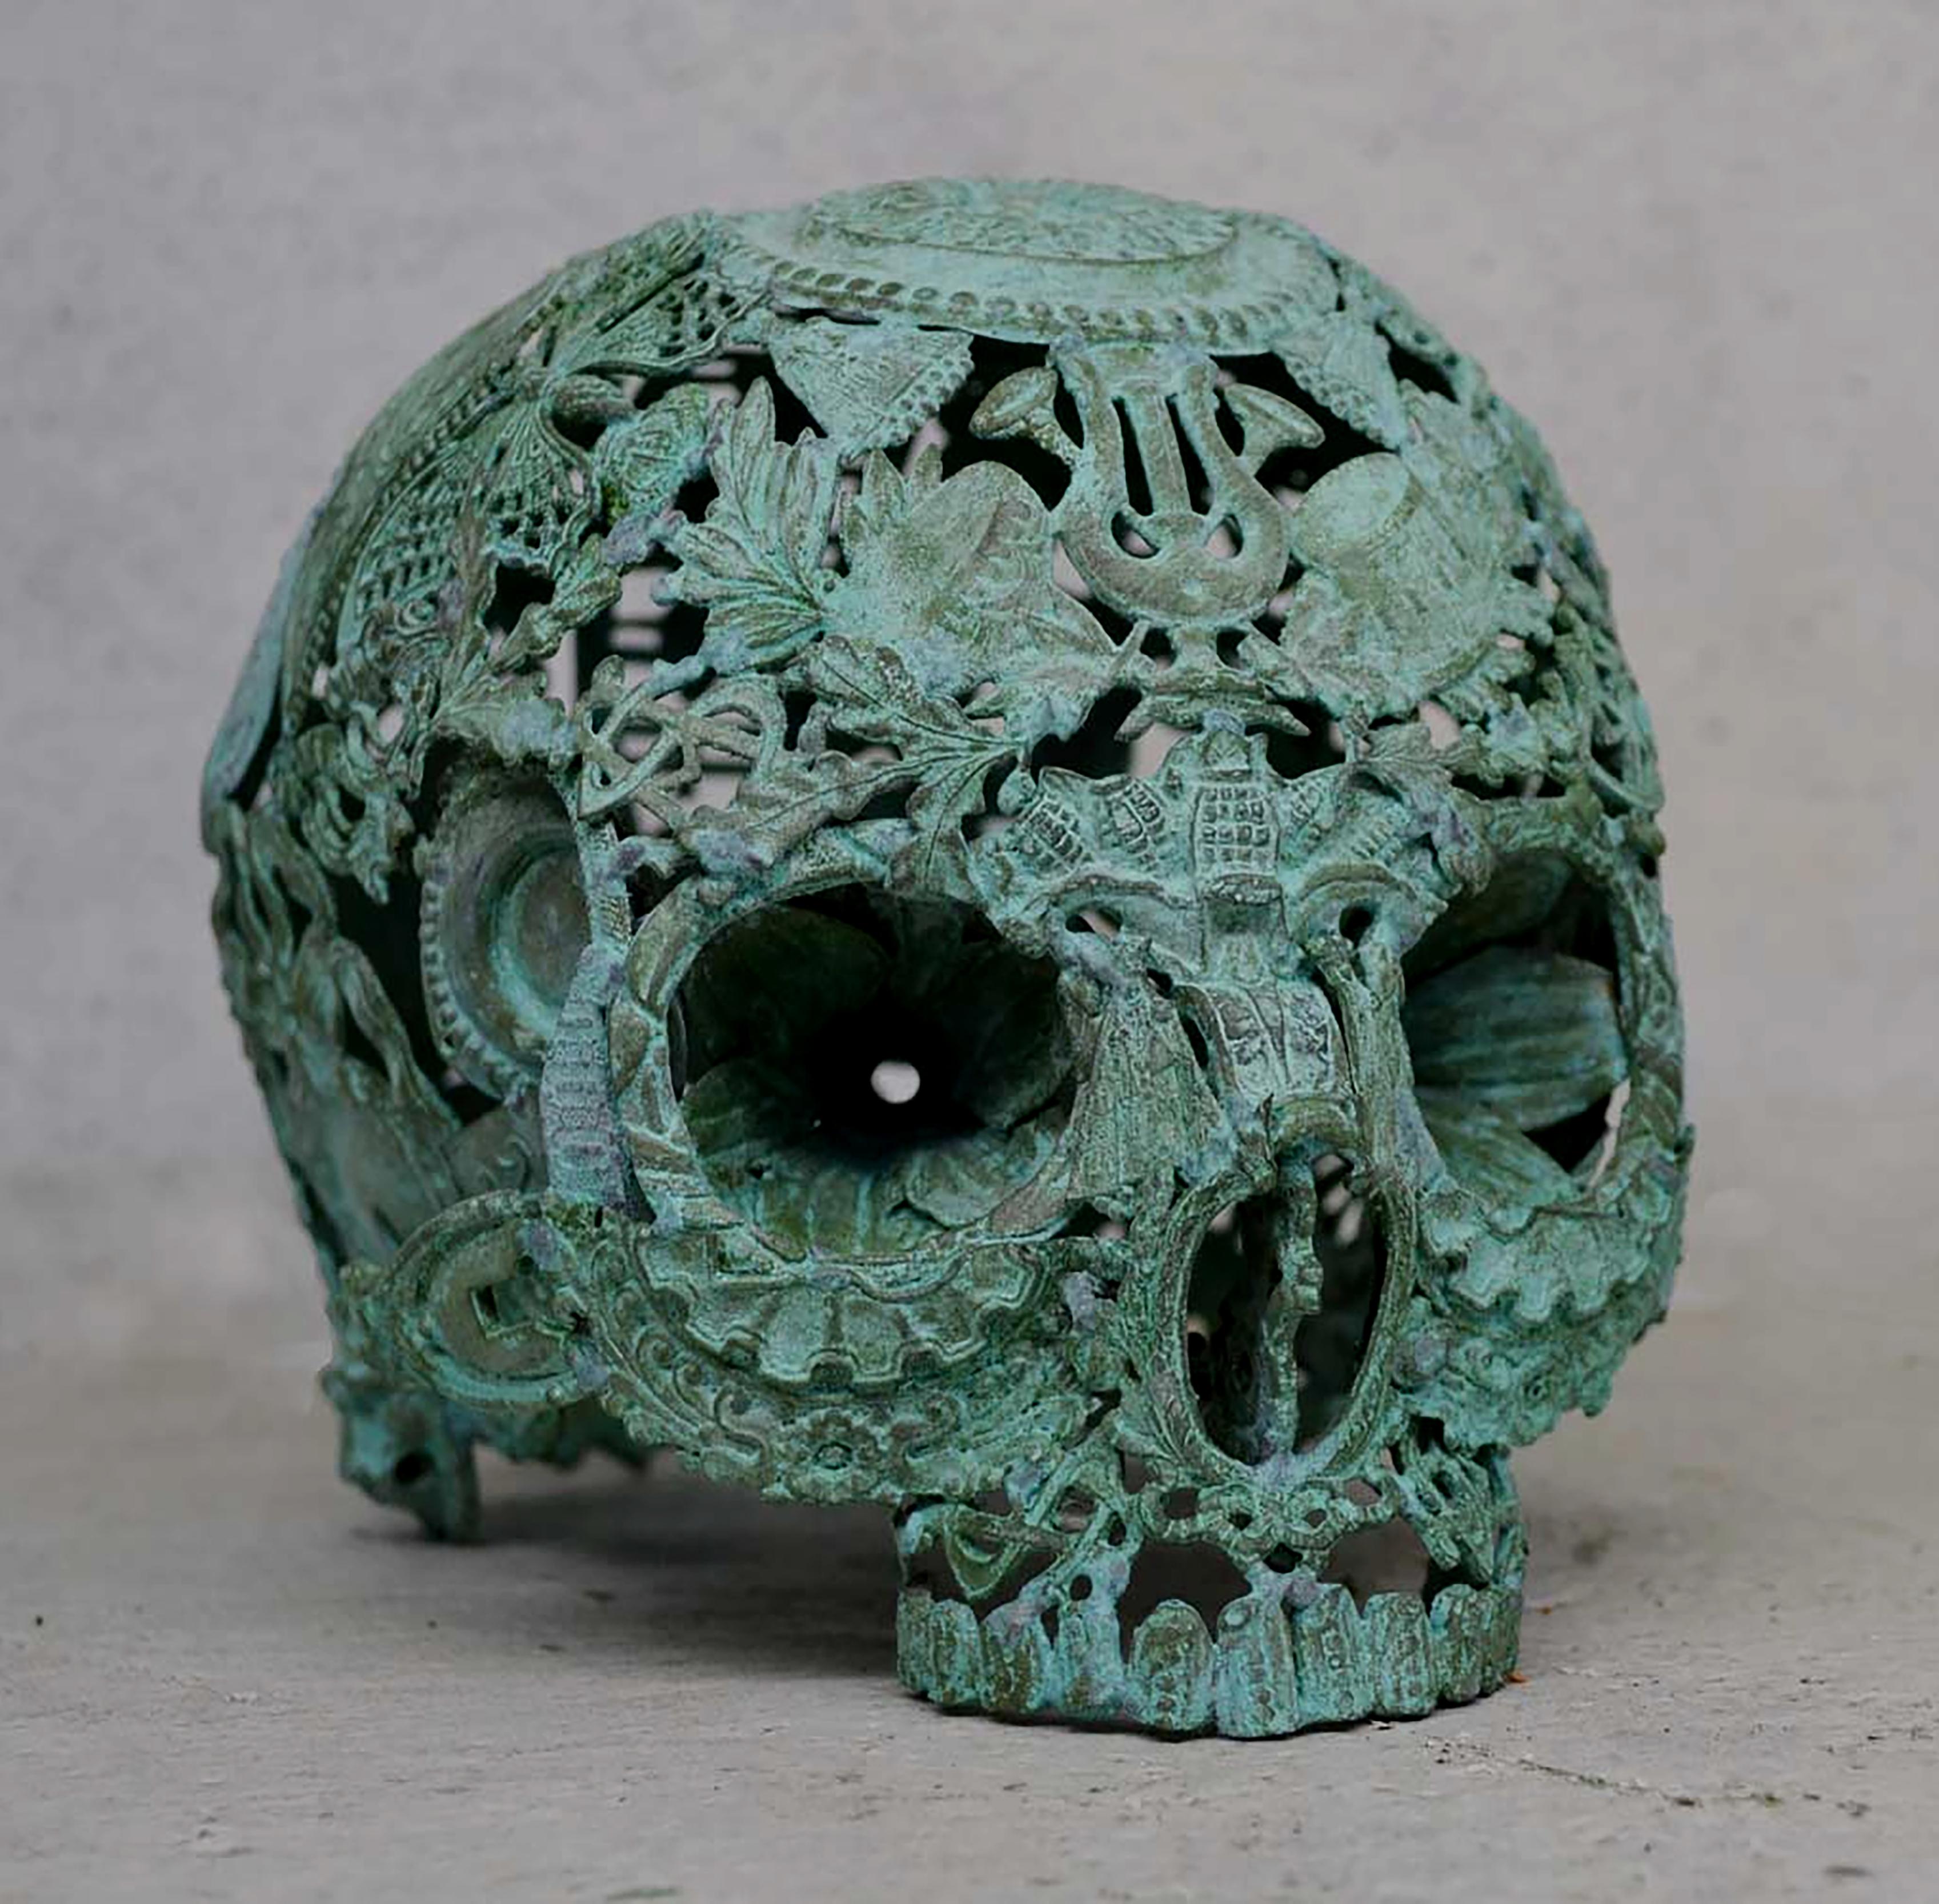 Alain BELLINO Figurative Sculpture - Vert de Peur - Skull Bronze Sculpture - Unique Piece